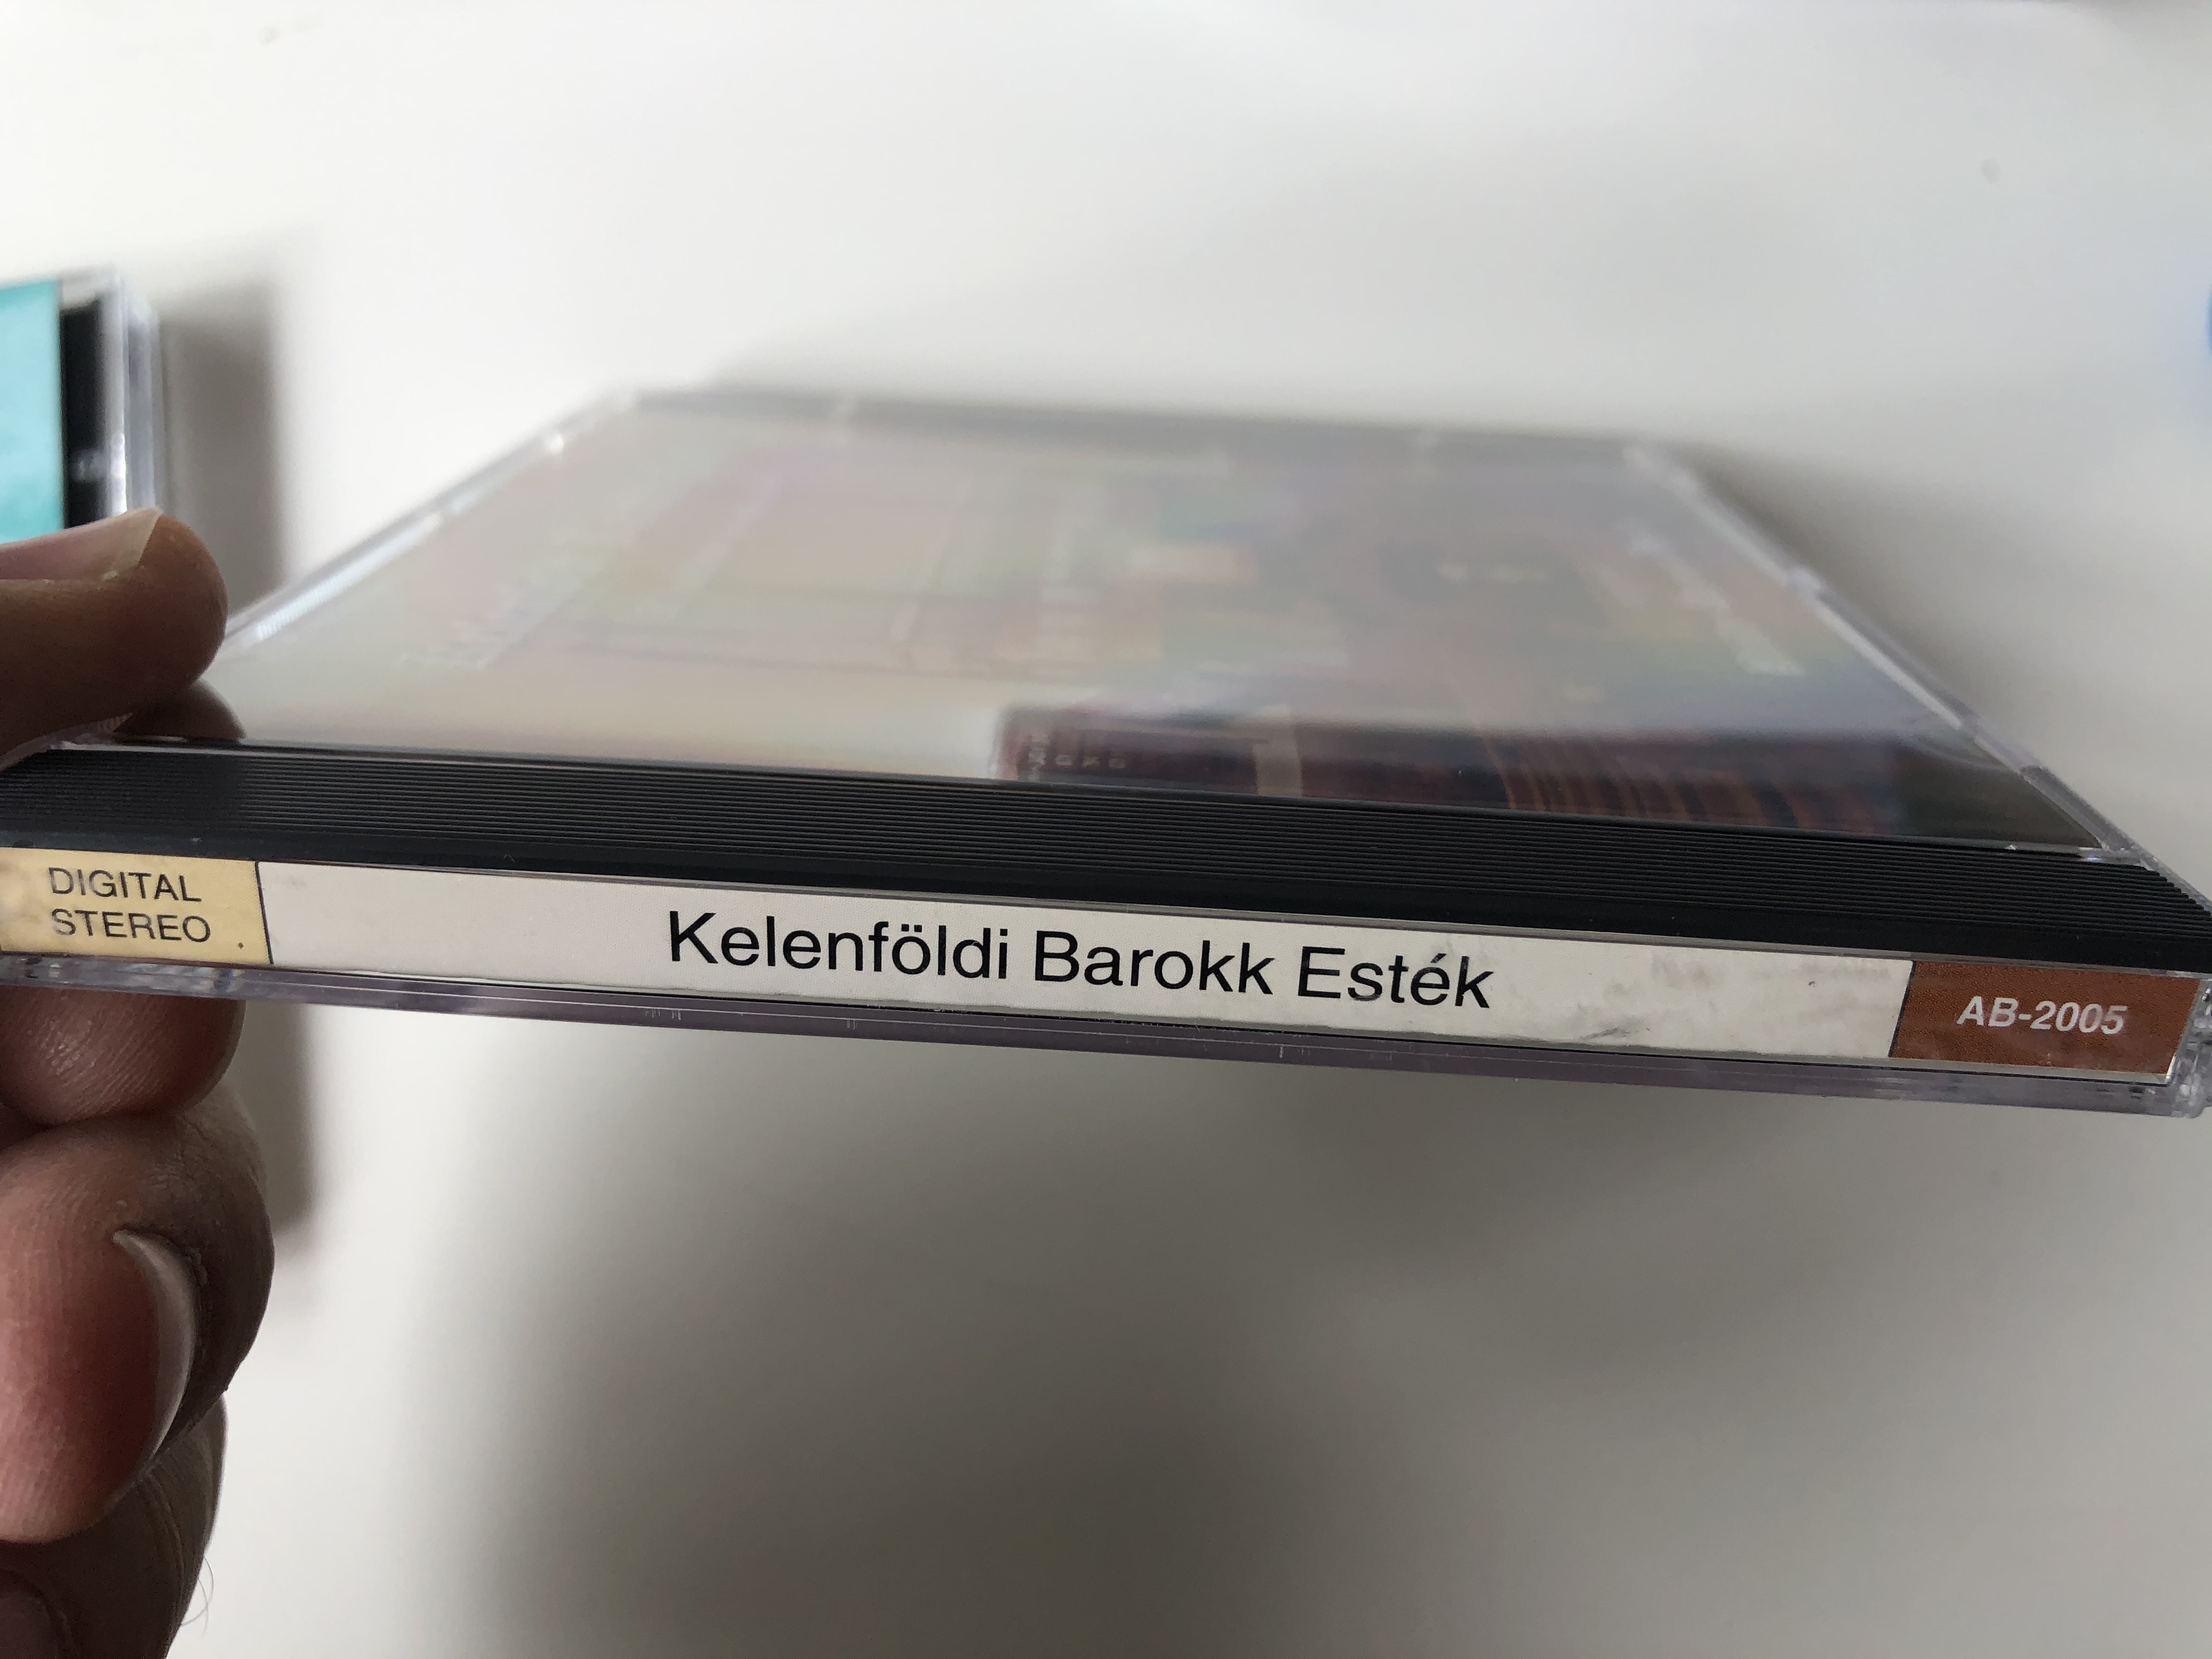 kelenfoldi-barokk-estek-50.-jubileumi-hangversenye-orgonal-alfoldy-boruss-csilla-audio-cd-2004-ab-2005-8-.jpg